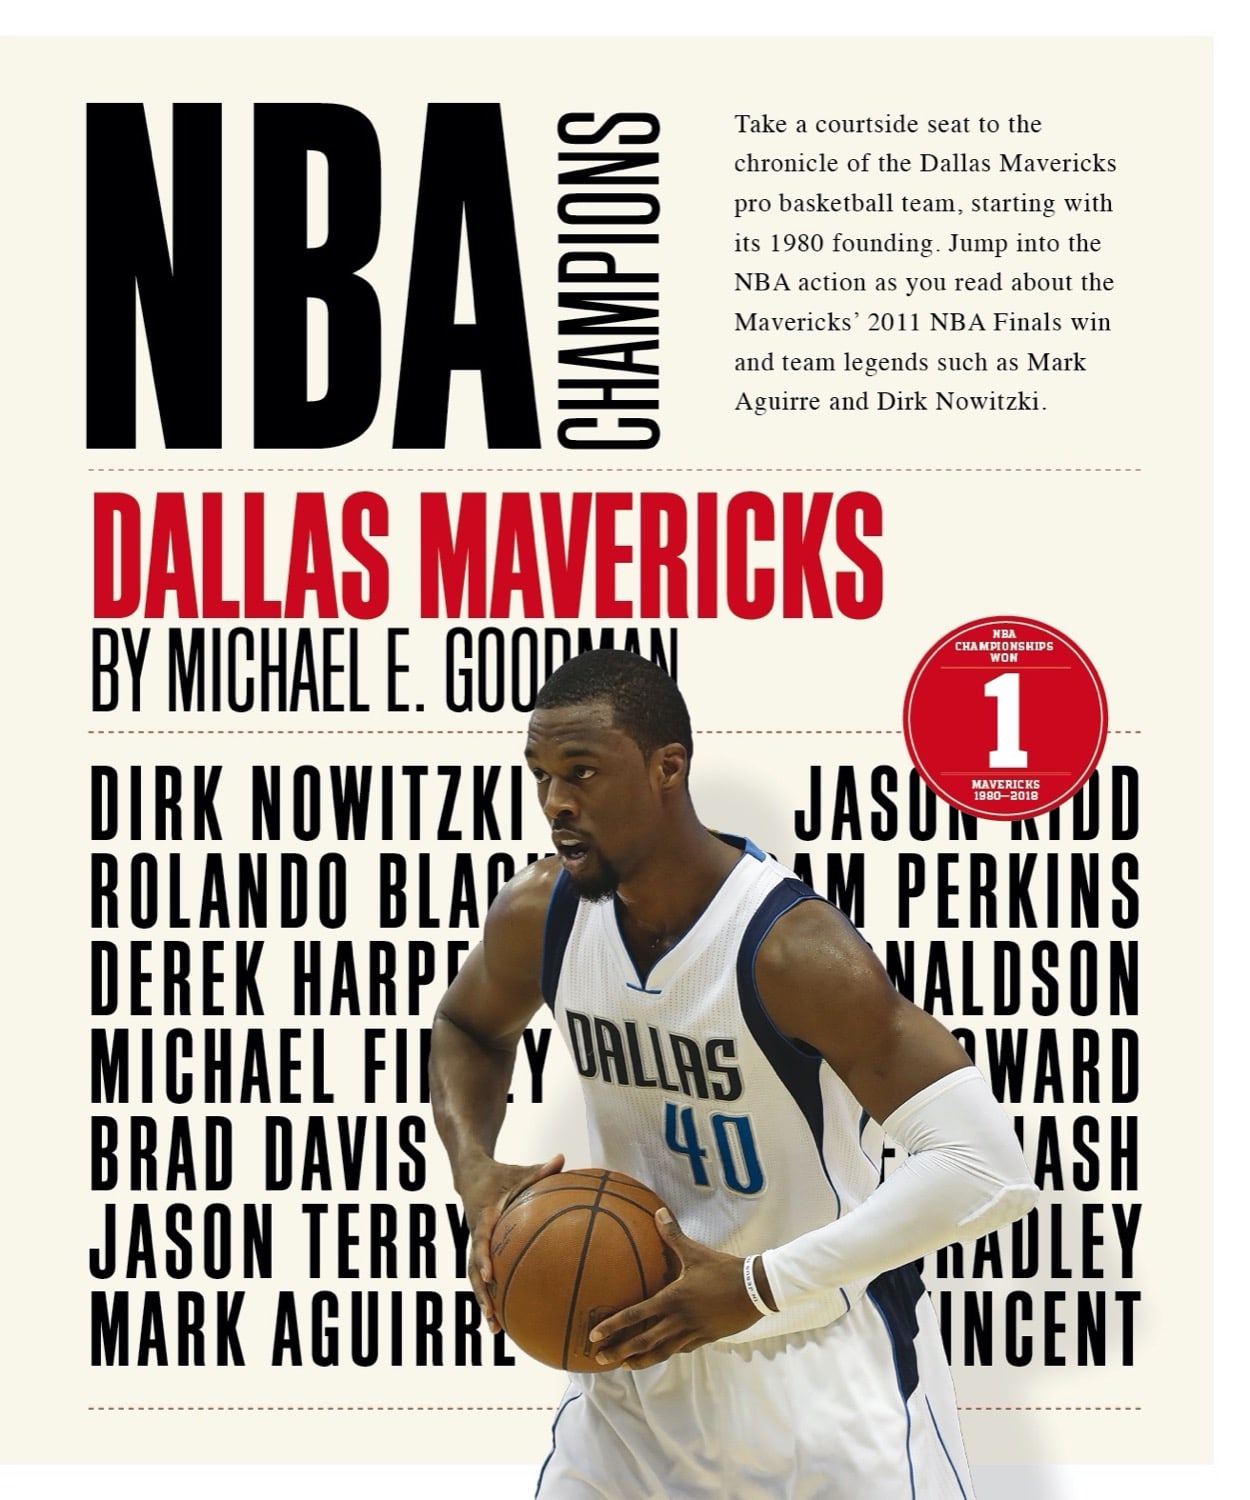 Black Dallas Mavericks NBA Jerseys for sale